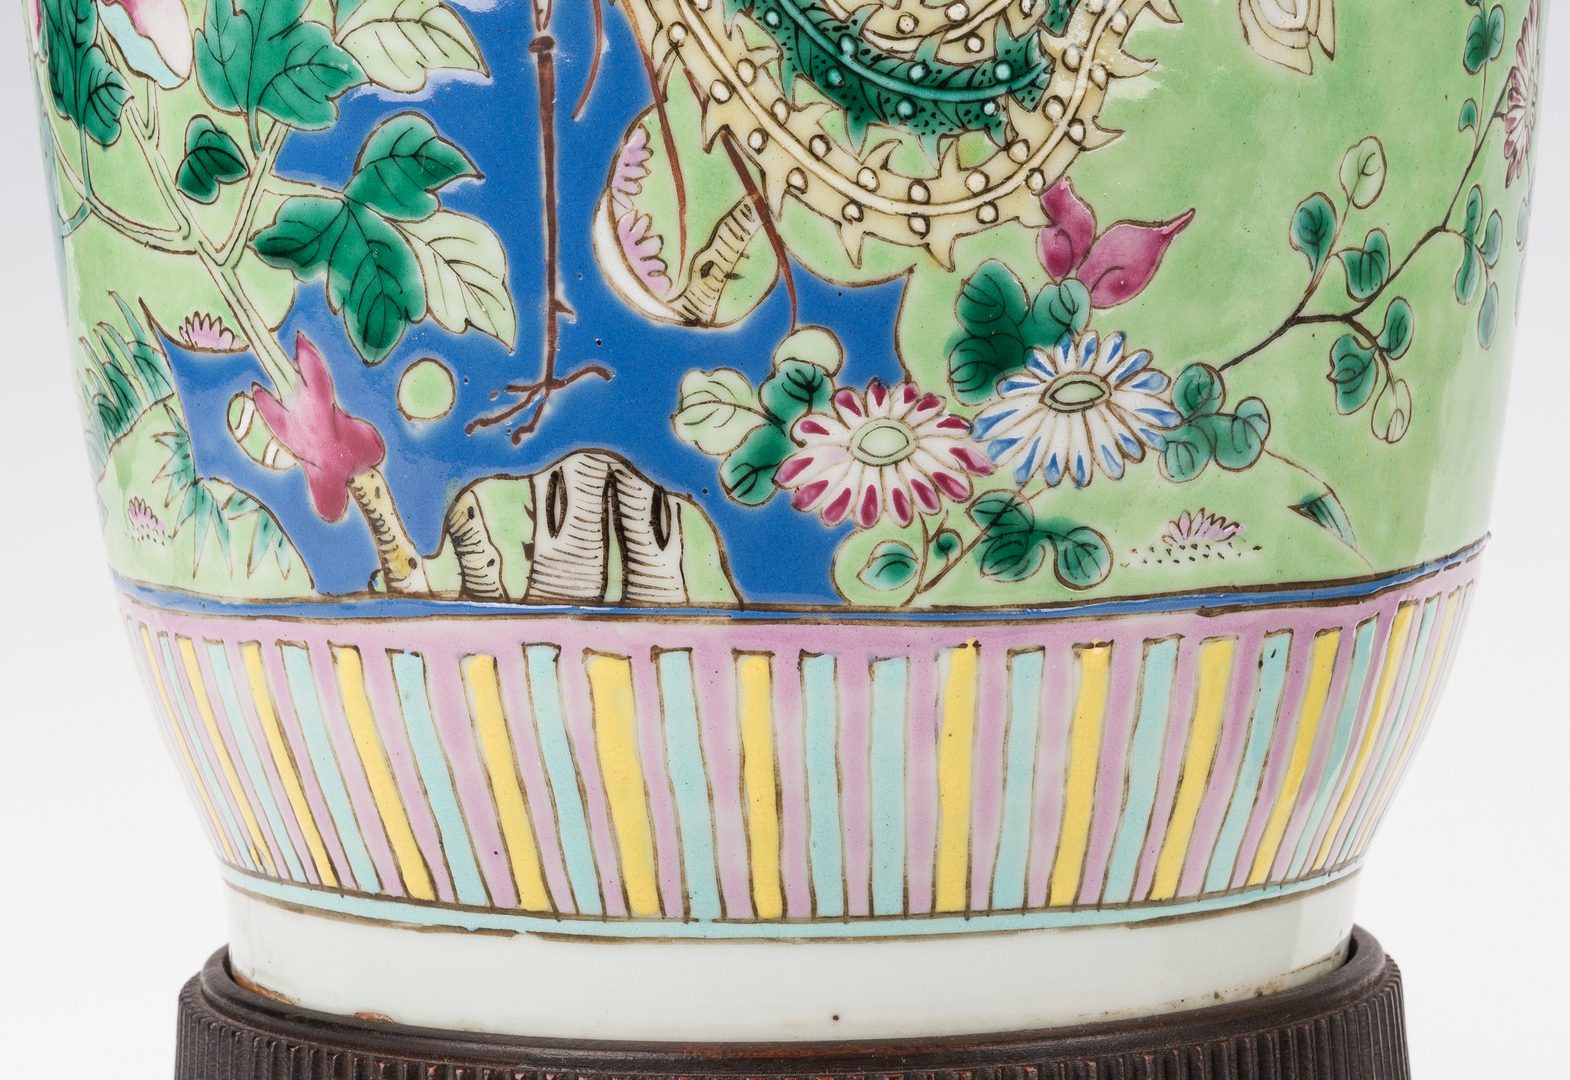 Lot 22: Pr. Chinese Porcelain Famille Verte Vases Mounted as Lamps